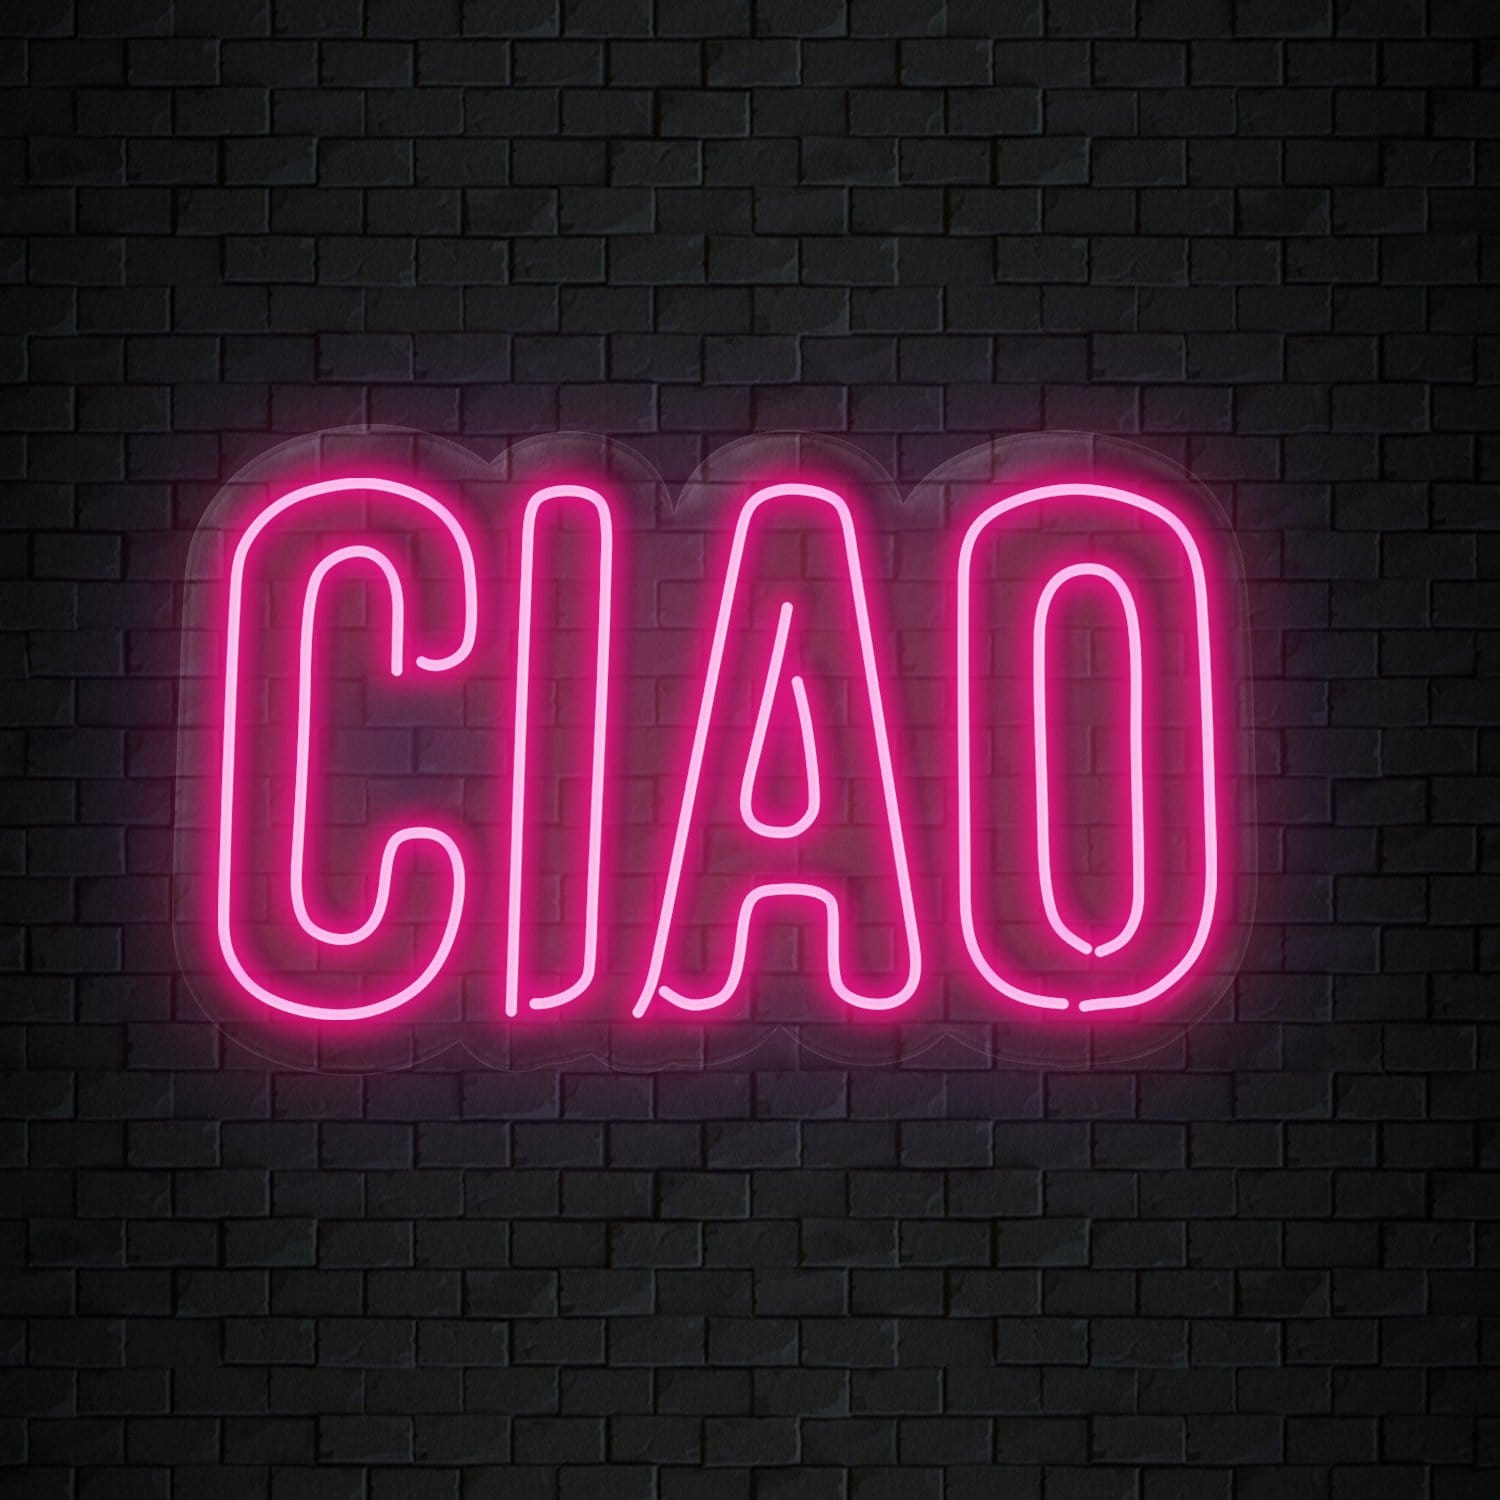 "Ciao" LED Neon Sign Schriftzug - NEONEVERGLOW